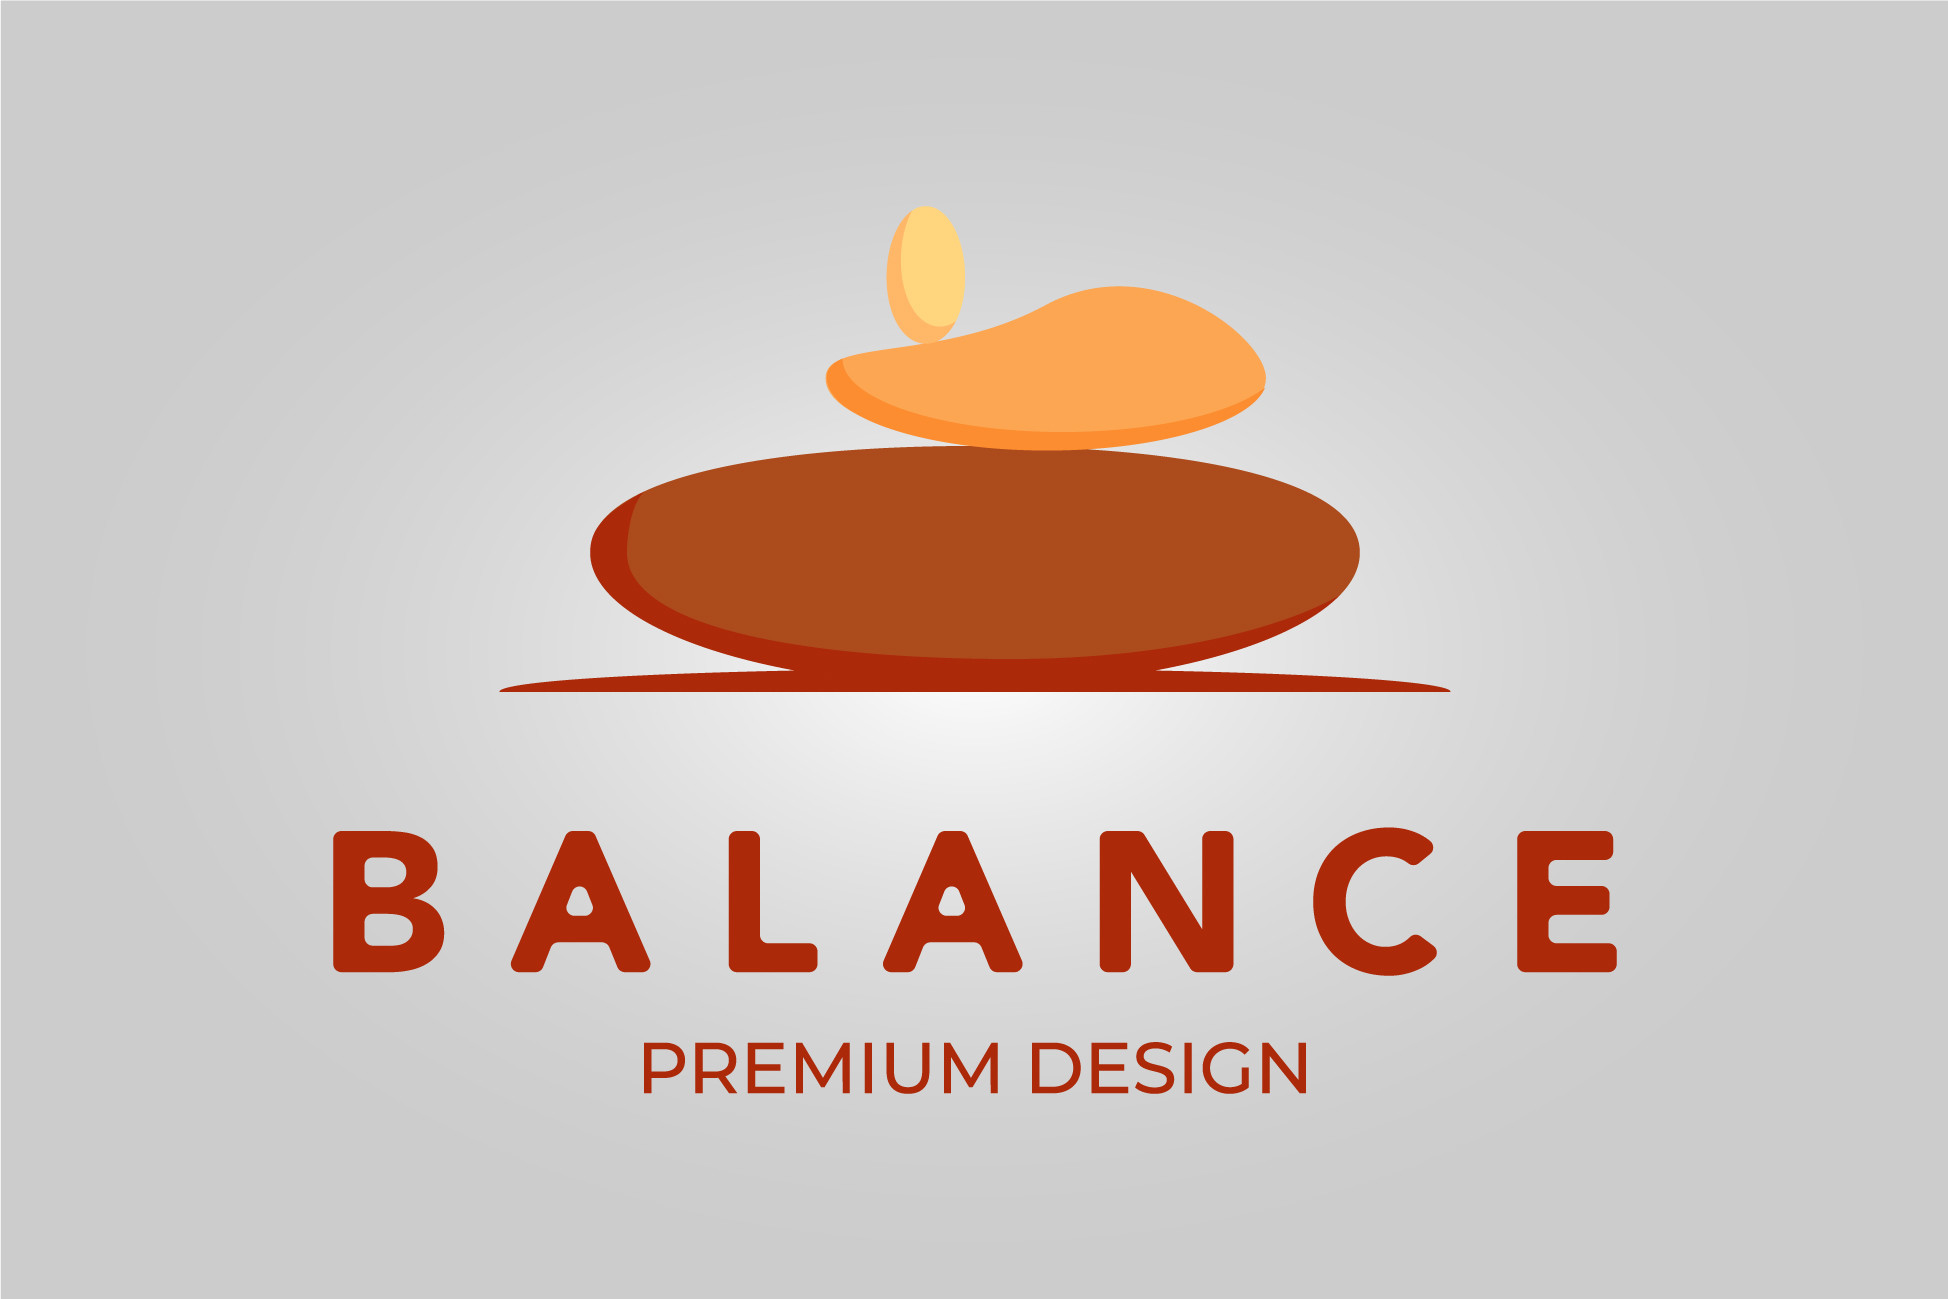 Stone Logo Vintage Minimalist Balancing Graphic by hsn42 · Creative Fabrica